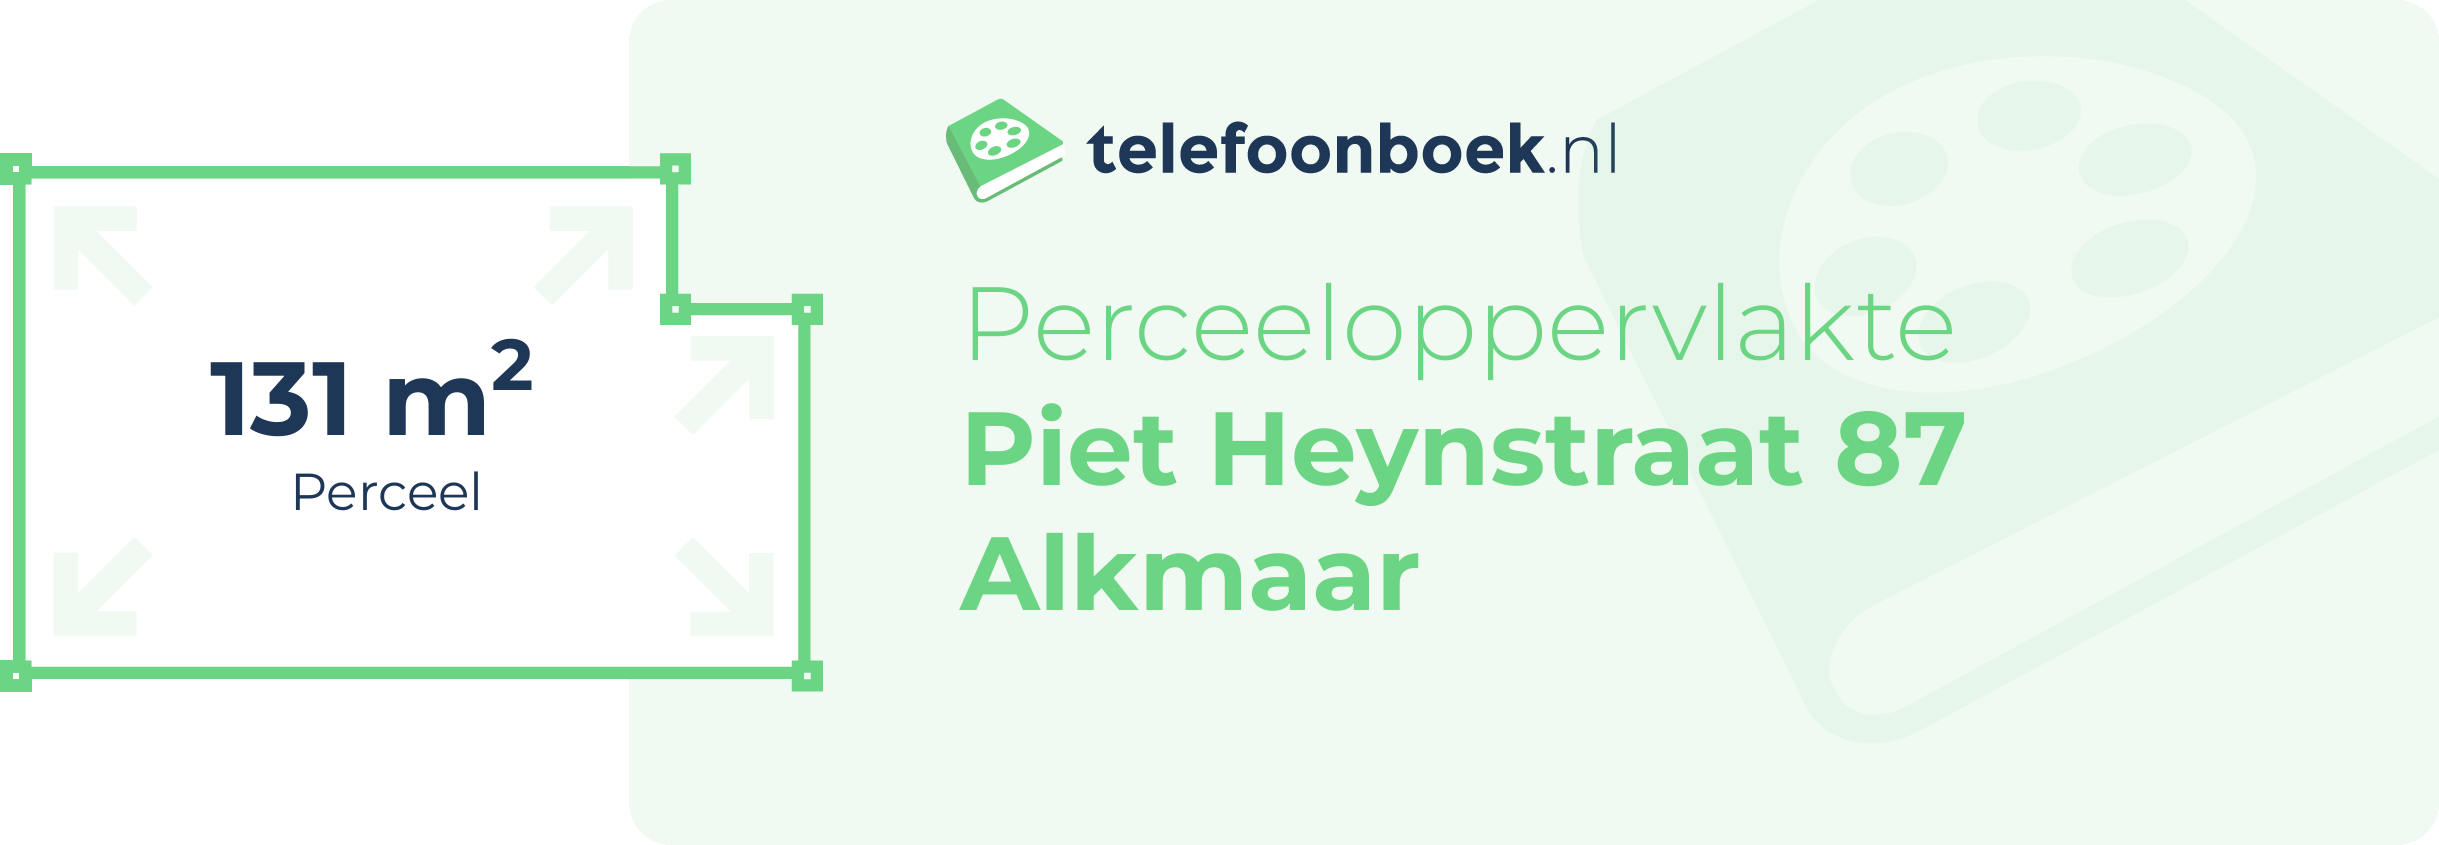 Perceeloppervlakte Piet Heynstraat 87 Alkmaar